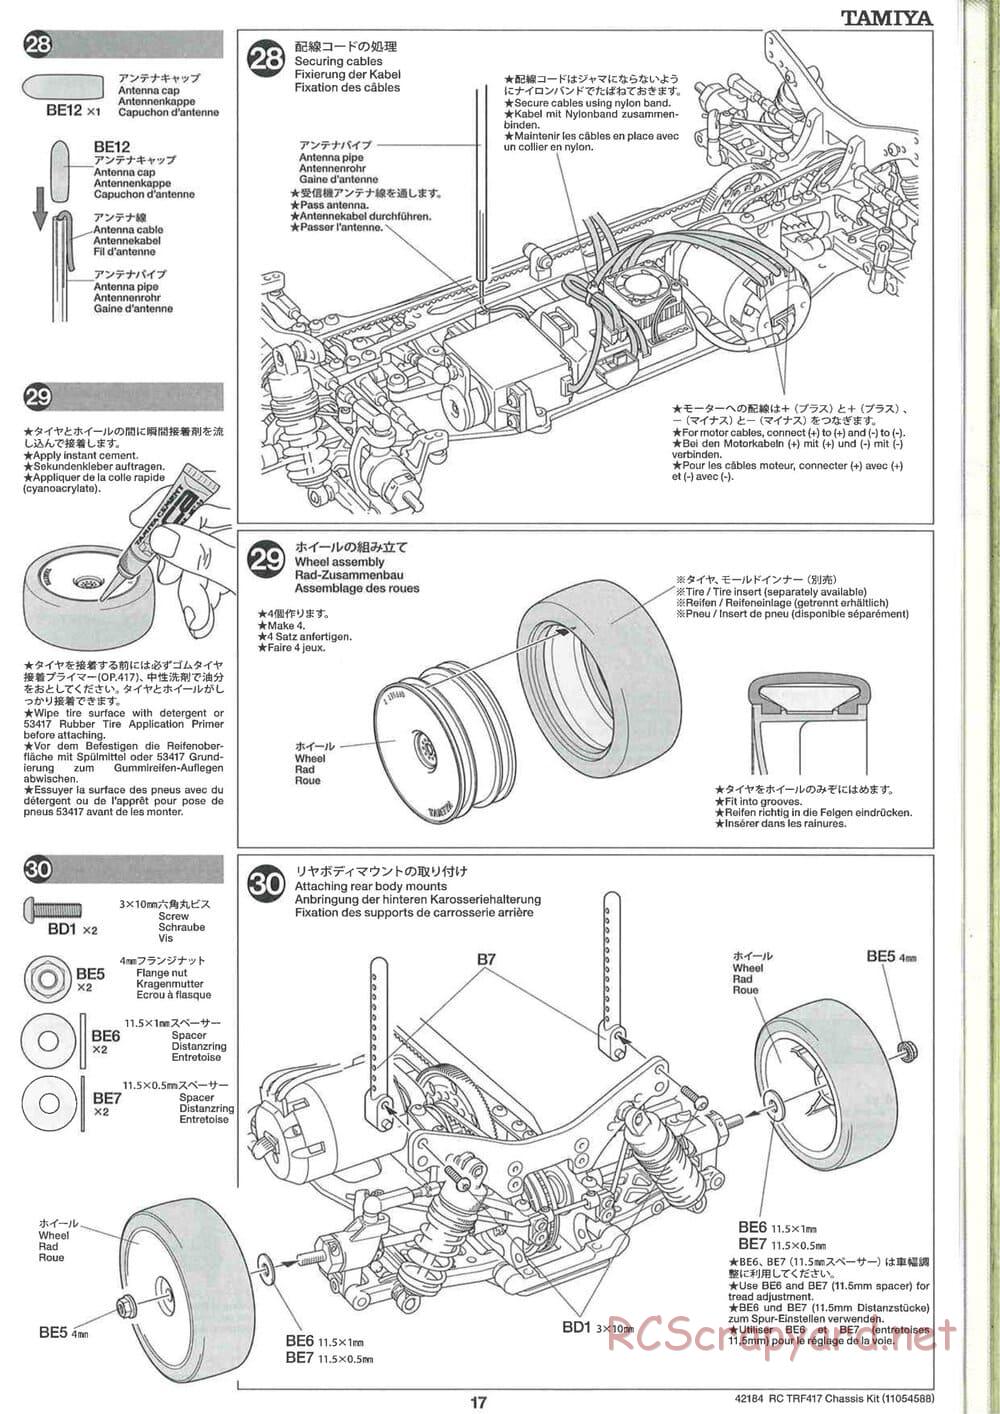 Tamiya - TRF417 Chassis - Manual - Page 17